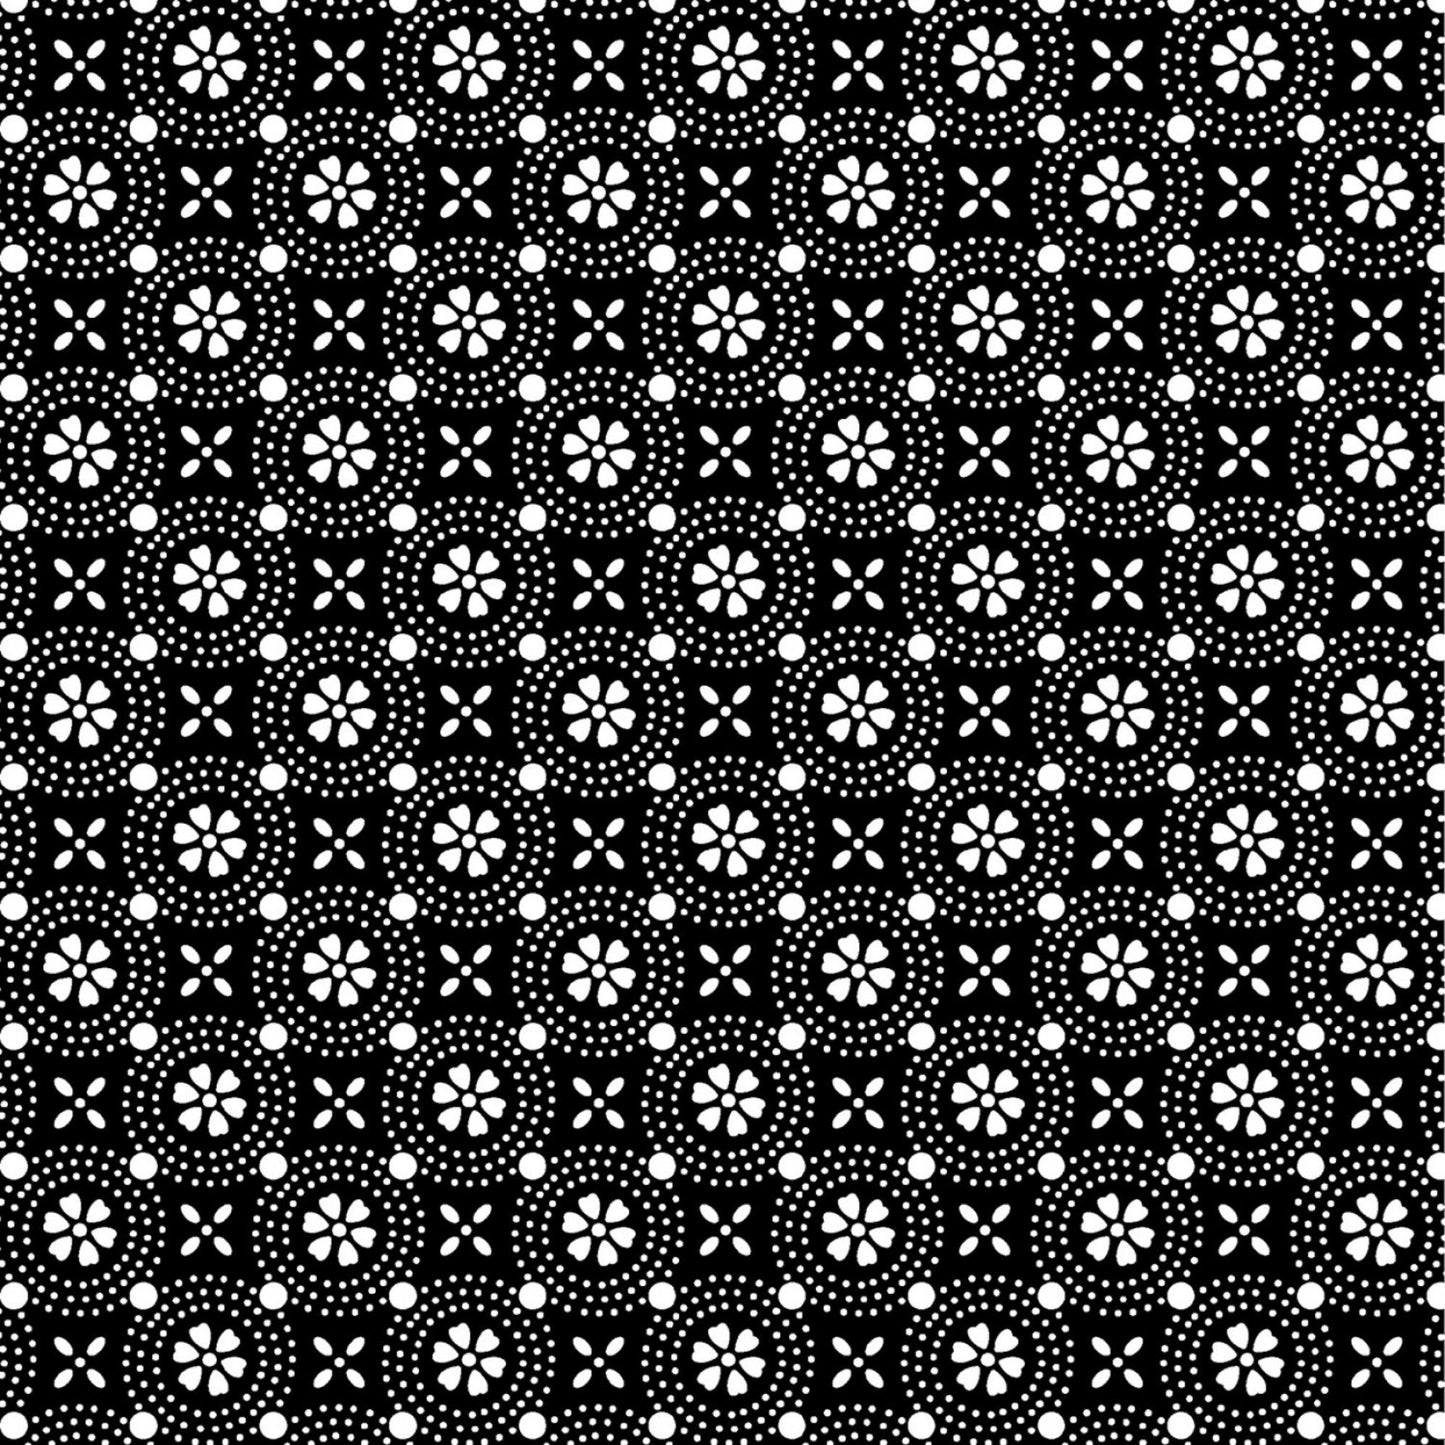 Maywood Studio Fabric 1 yard (36"x44") / Geometric Blk White Geometric Cotton Fabric, Polka Dot or striped fabric, Lady bug spot fabric, Lady bug dots, , Cotton fabric by the yard